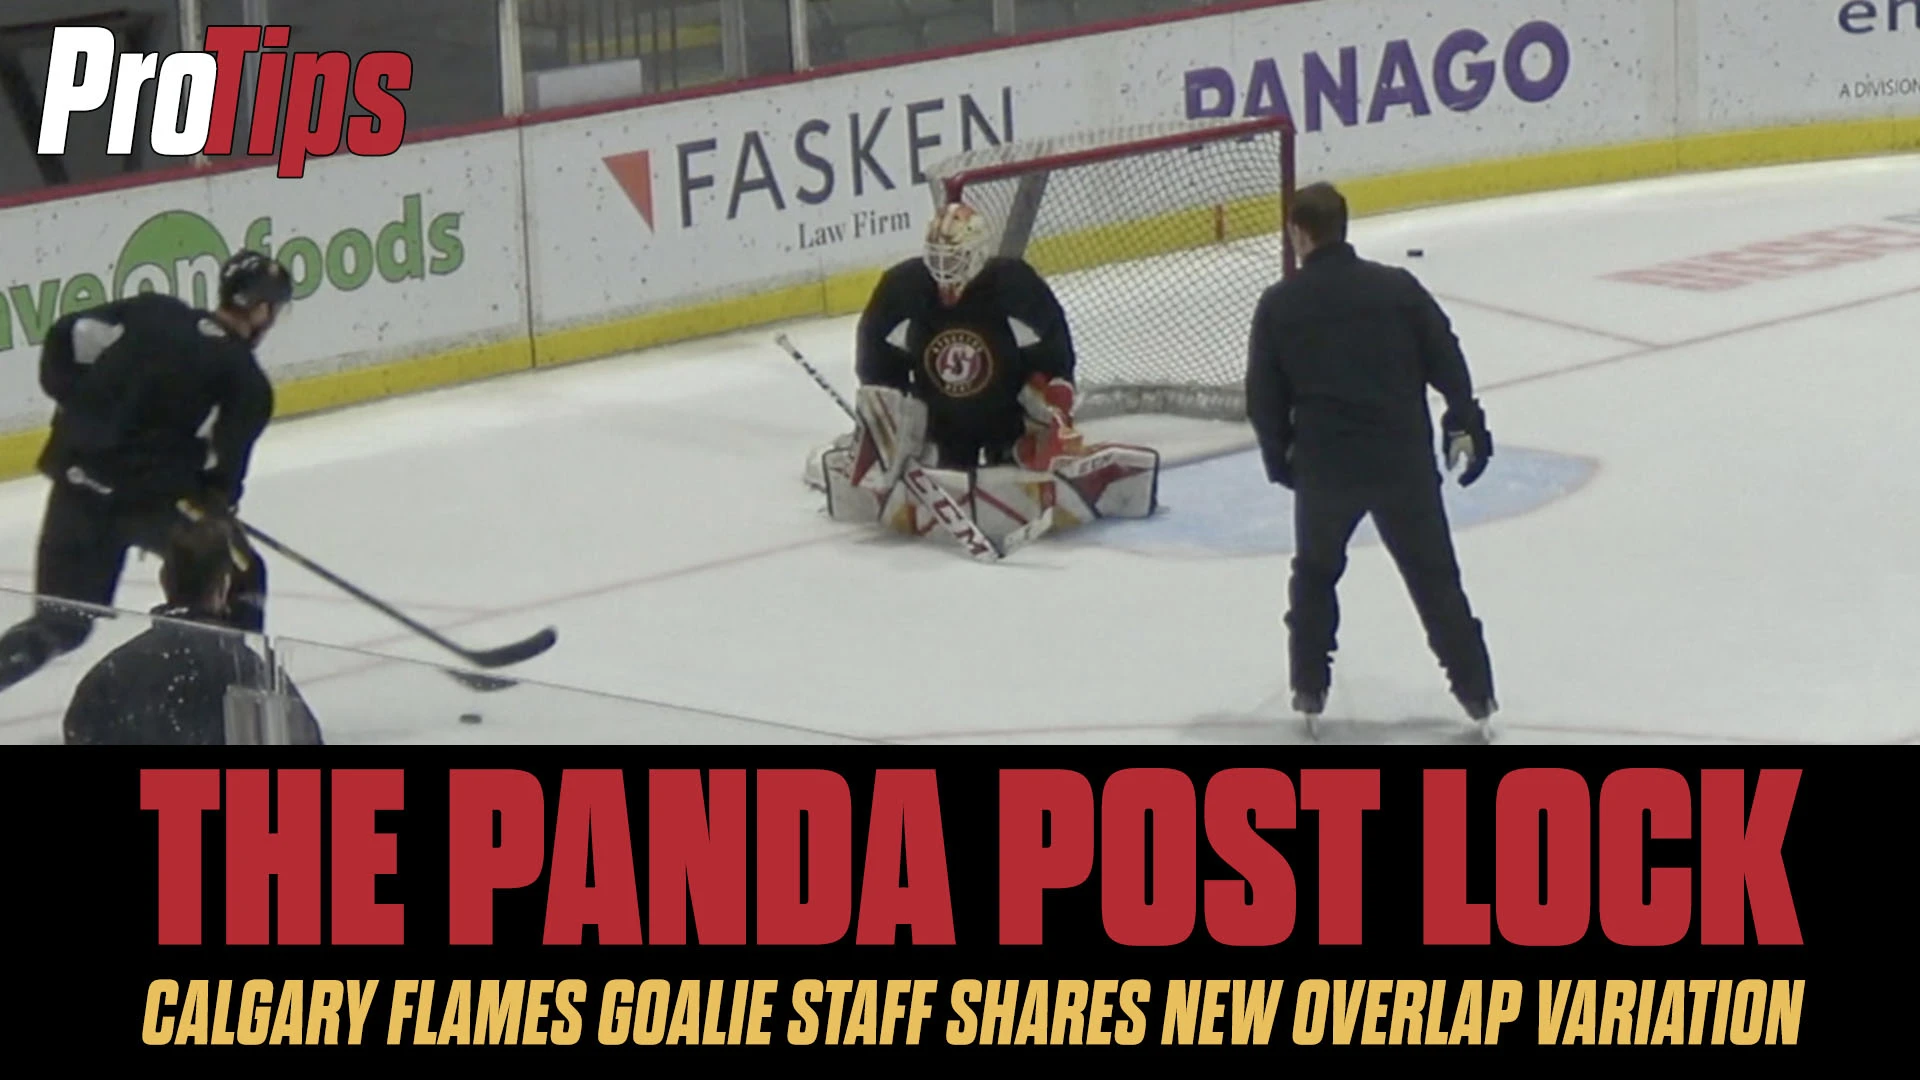 Pro Tips: The Panda Post Lock